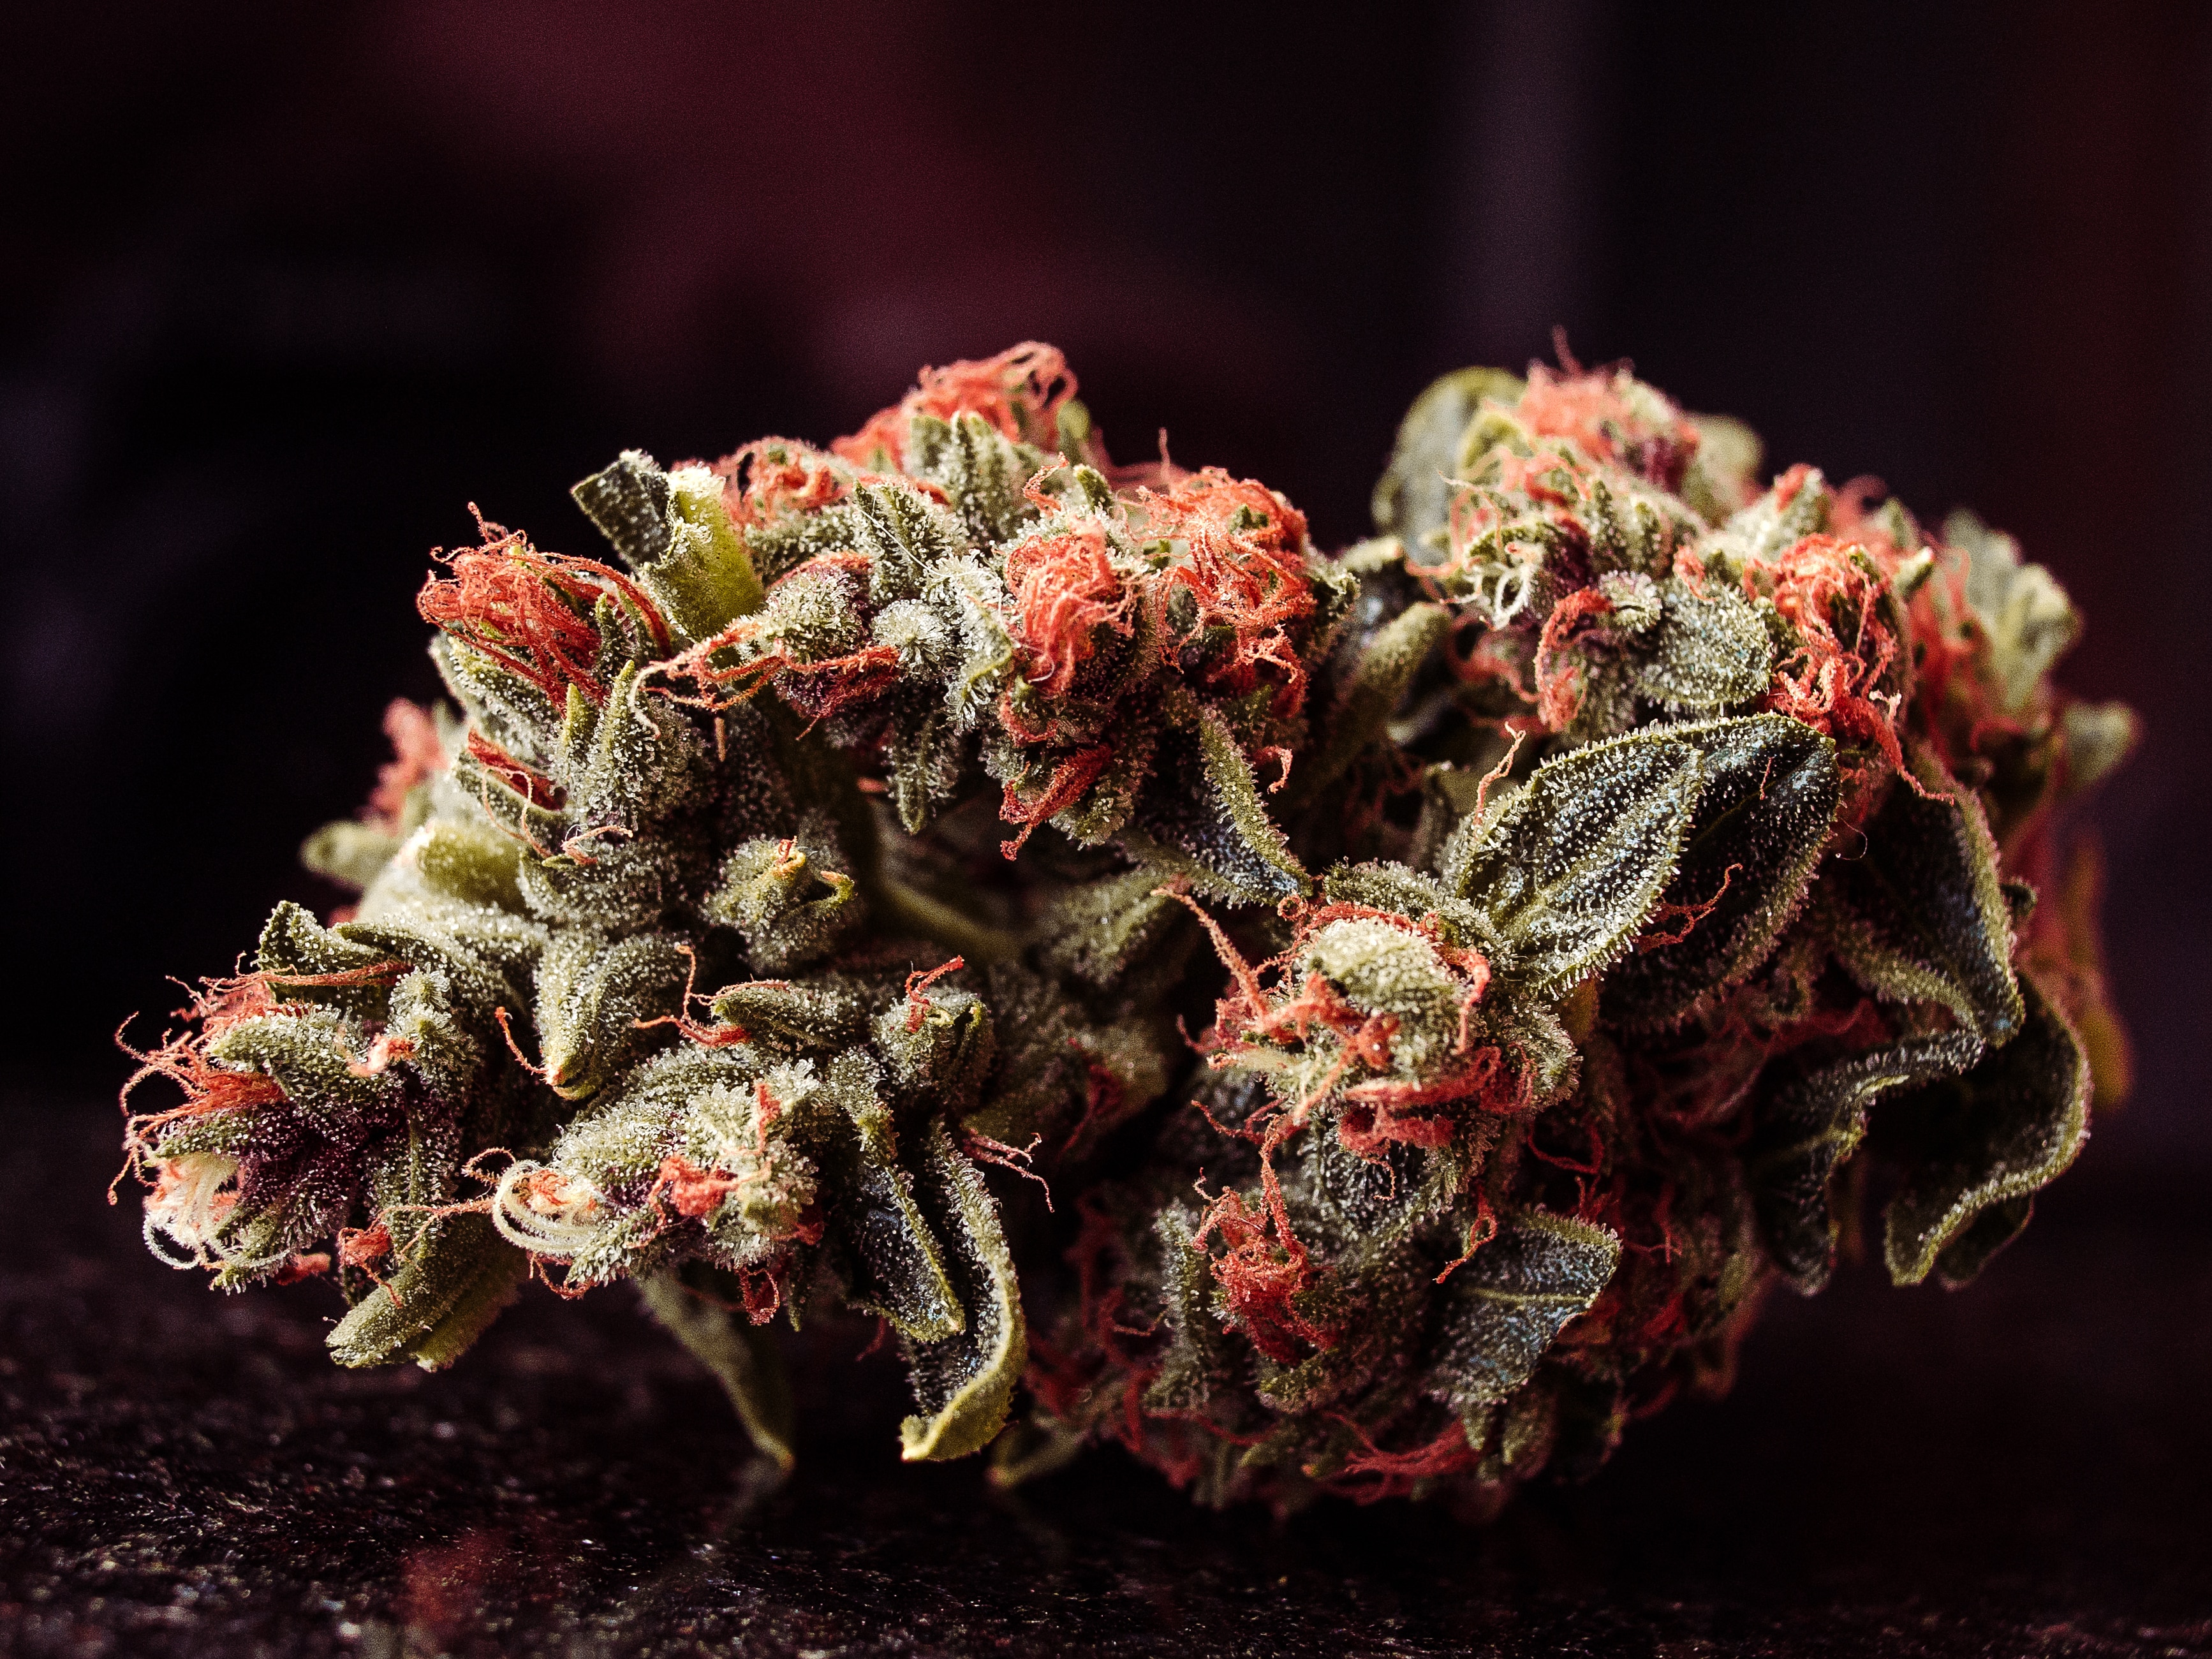 Rare Panama Red feminized cannabis strain seeds smell and taste